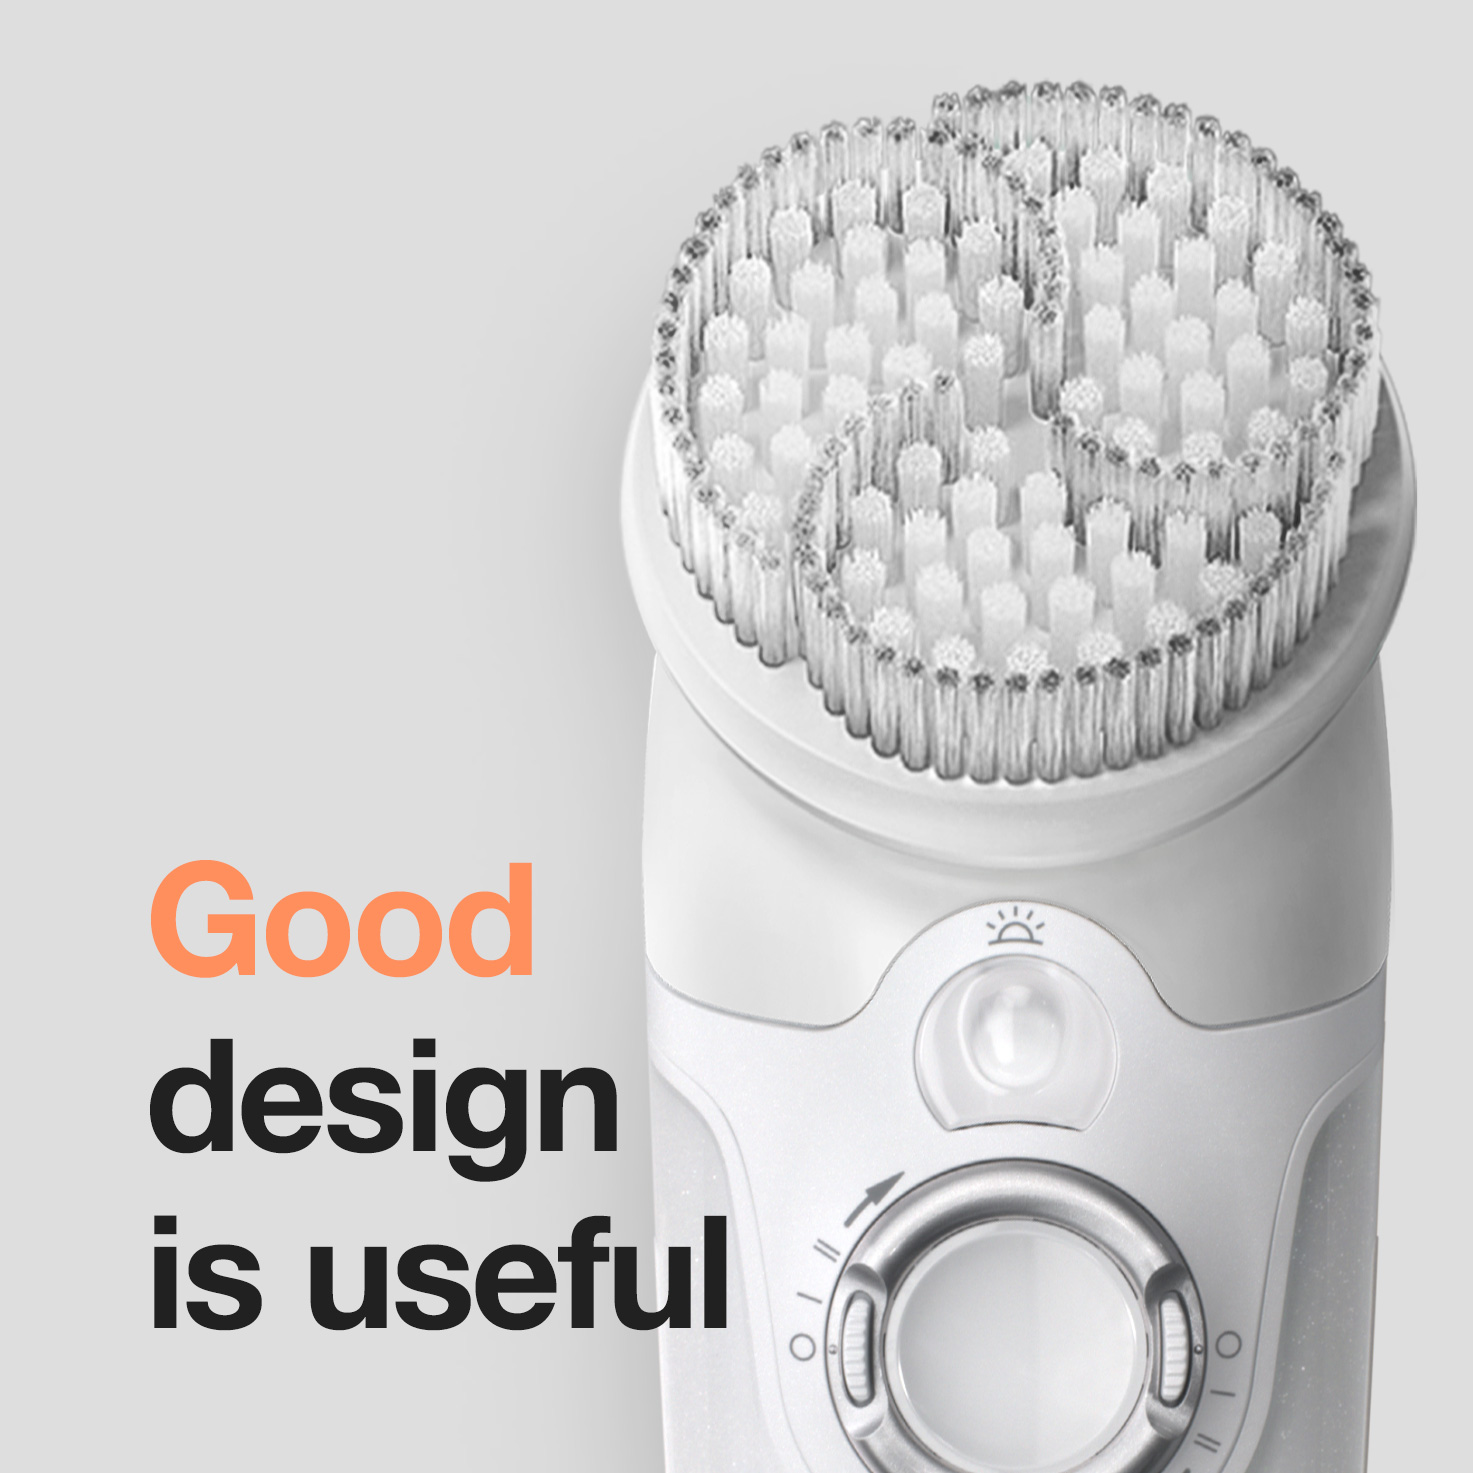 Good design is useful